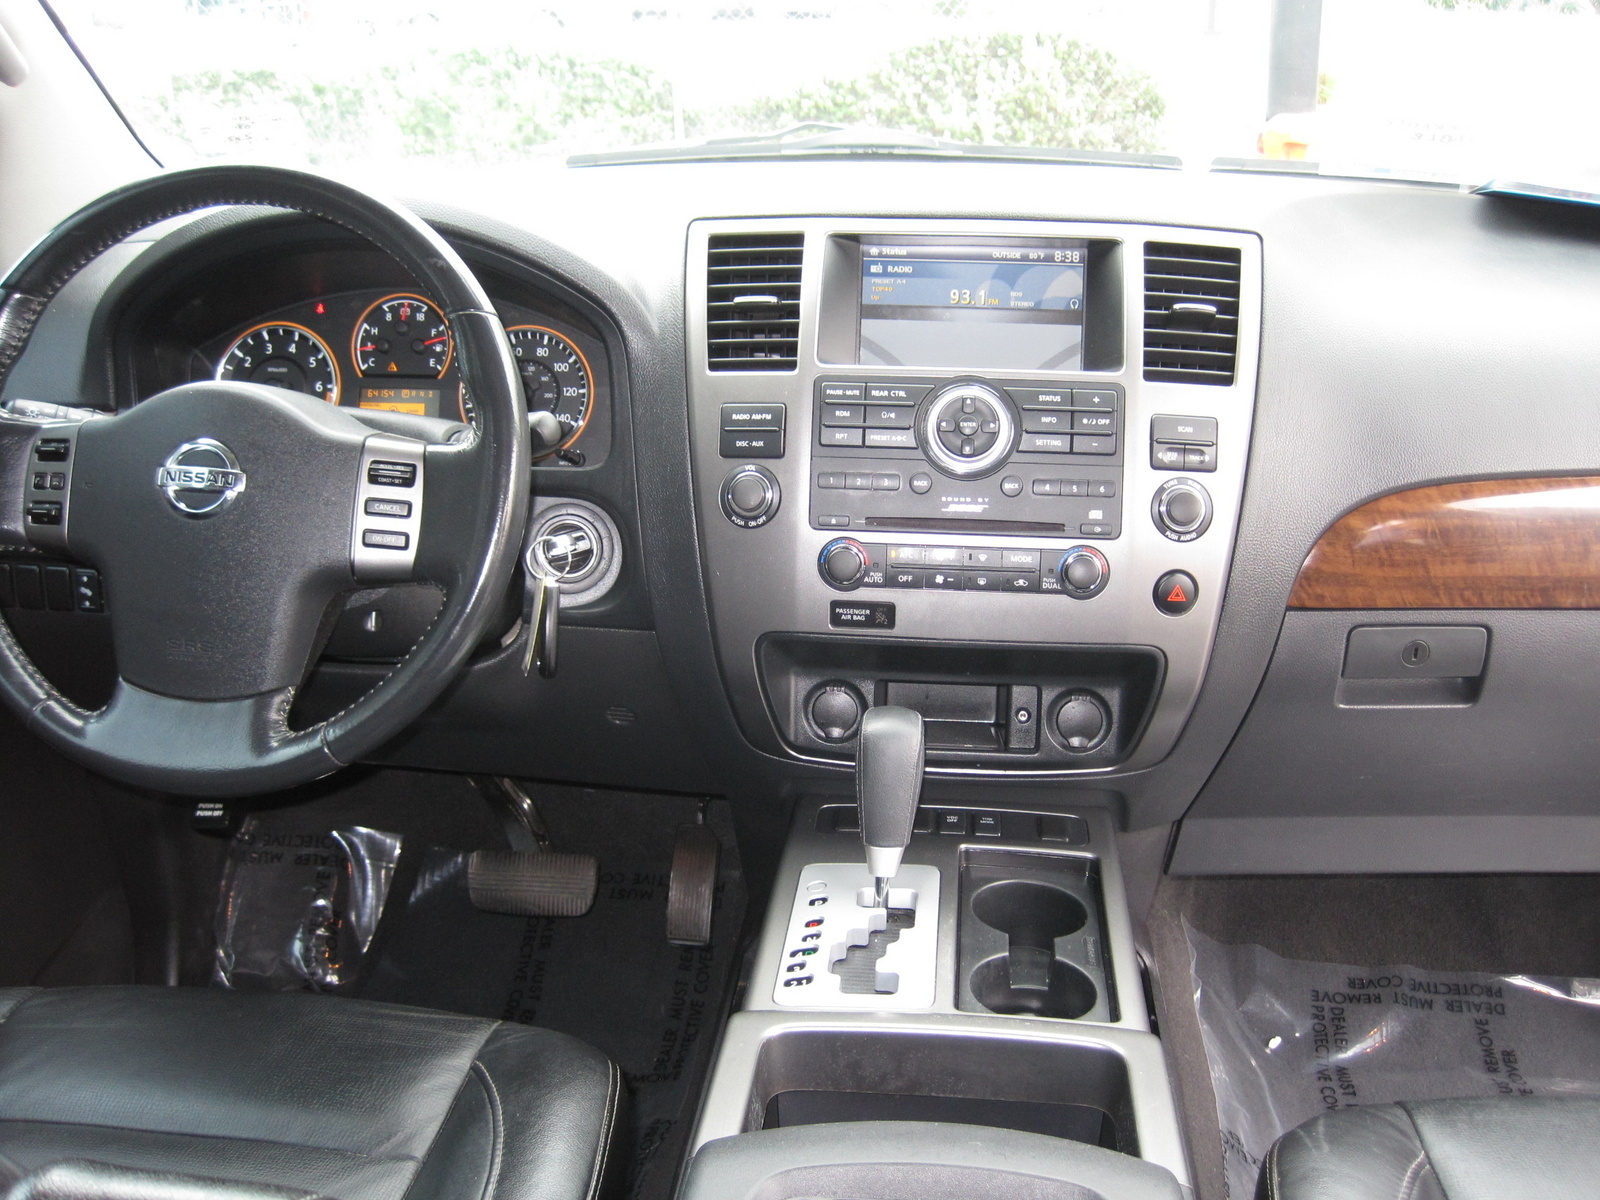 2010 Nissan armada navigation system